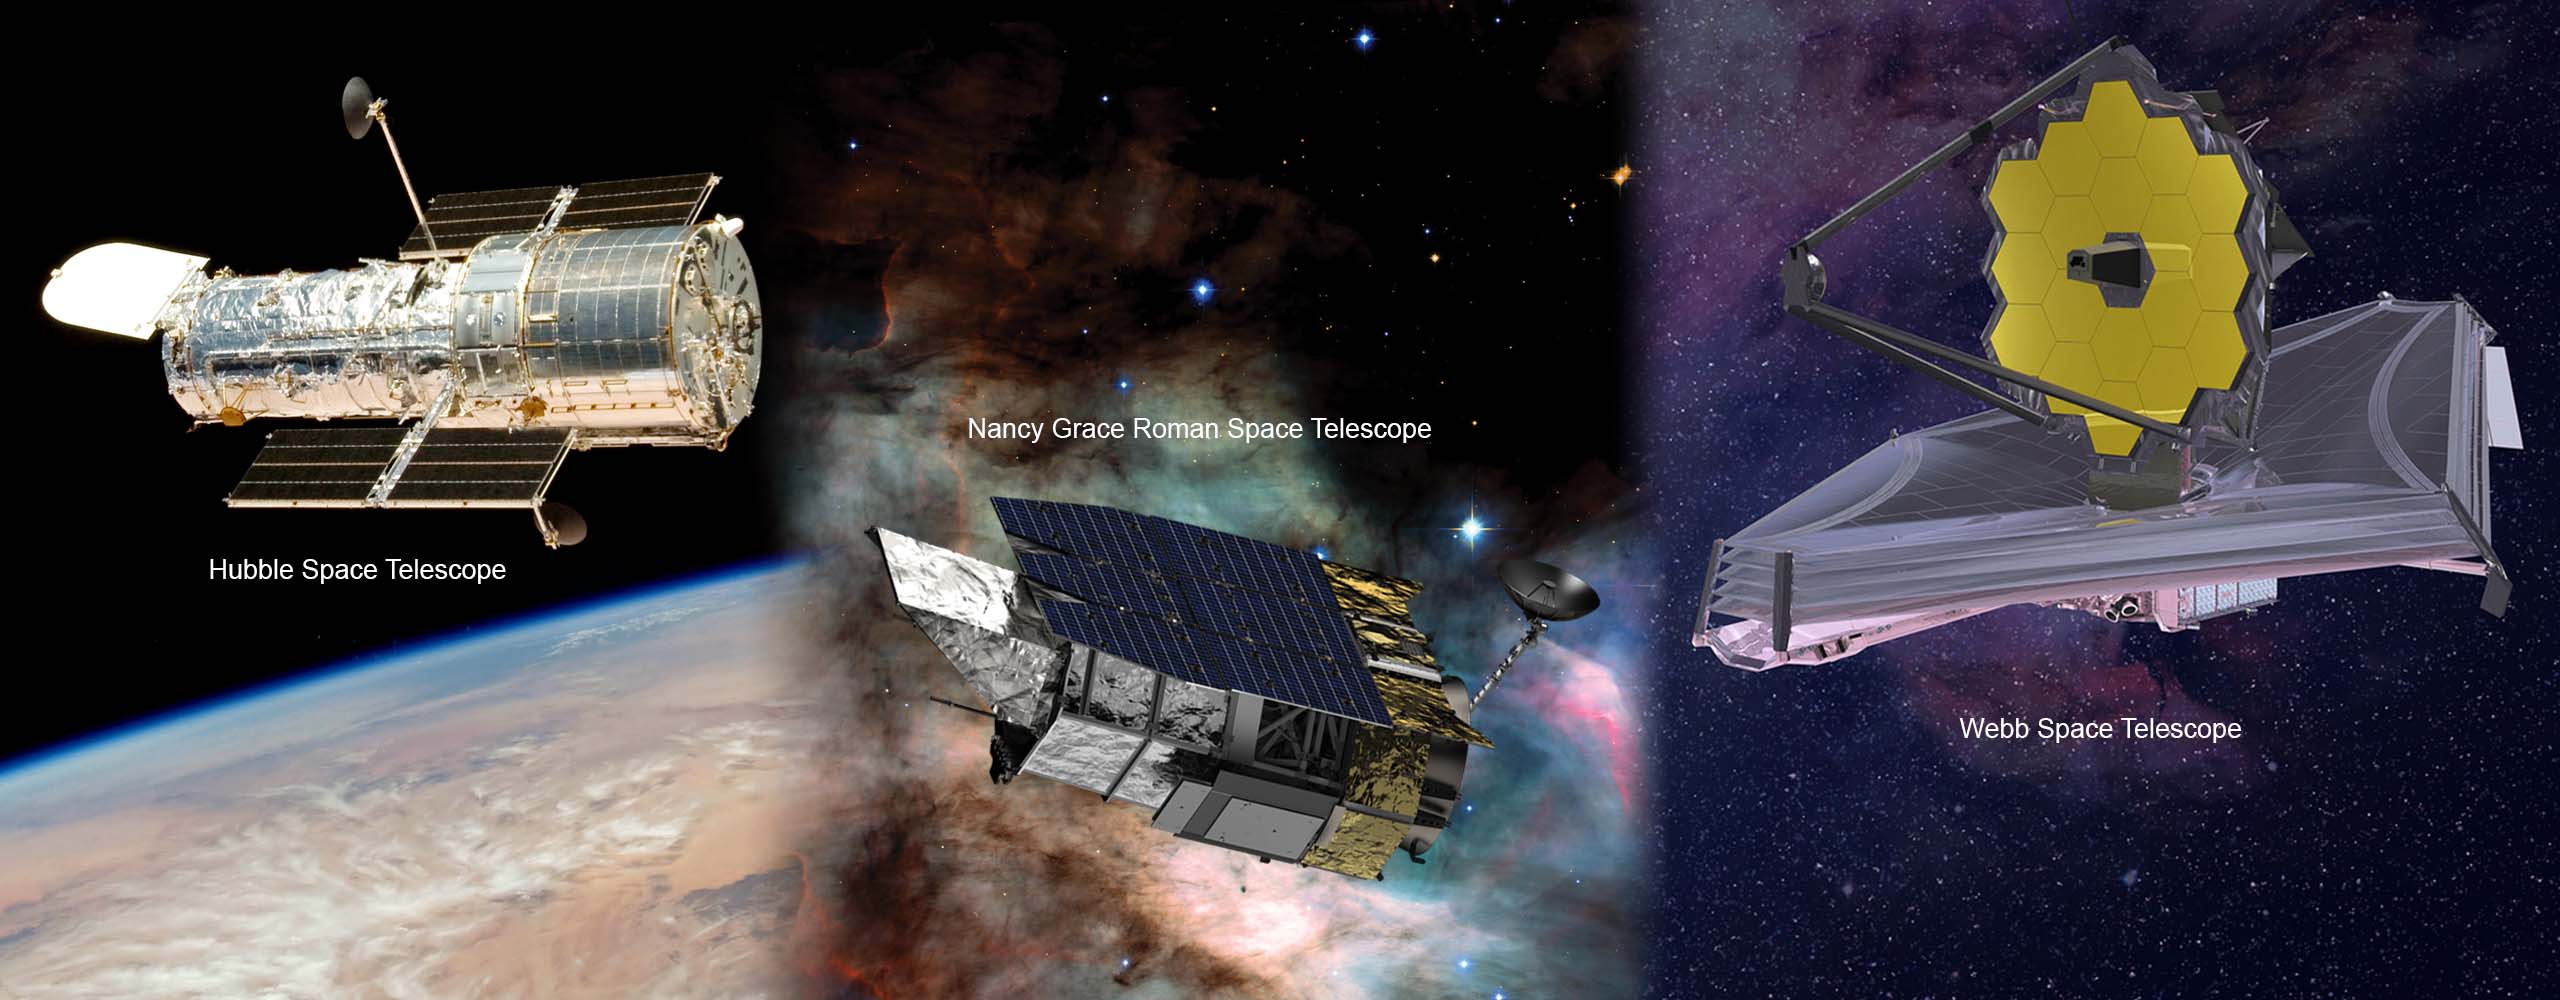 STScI - AURA Astronomy